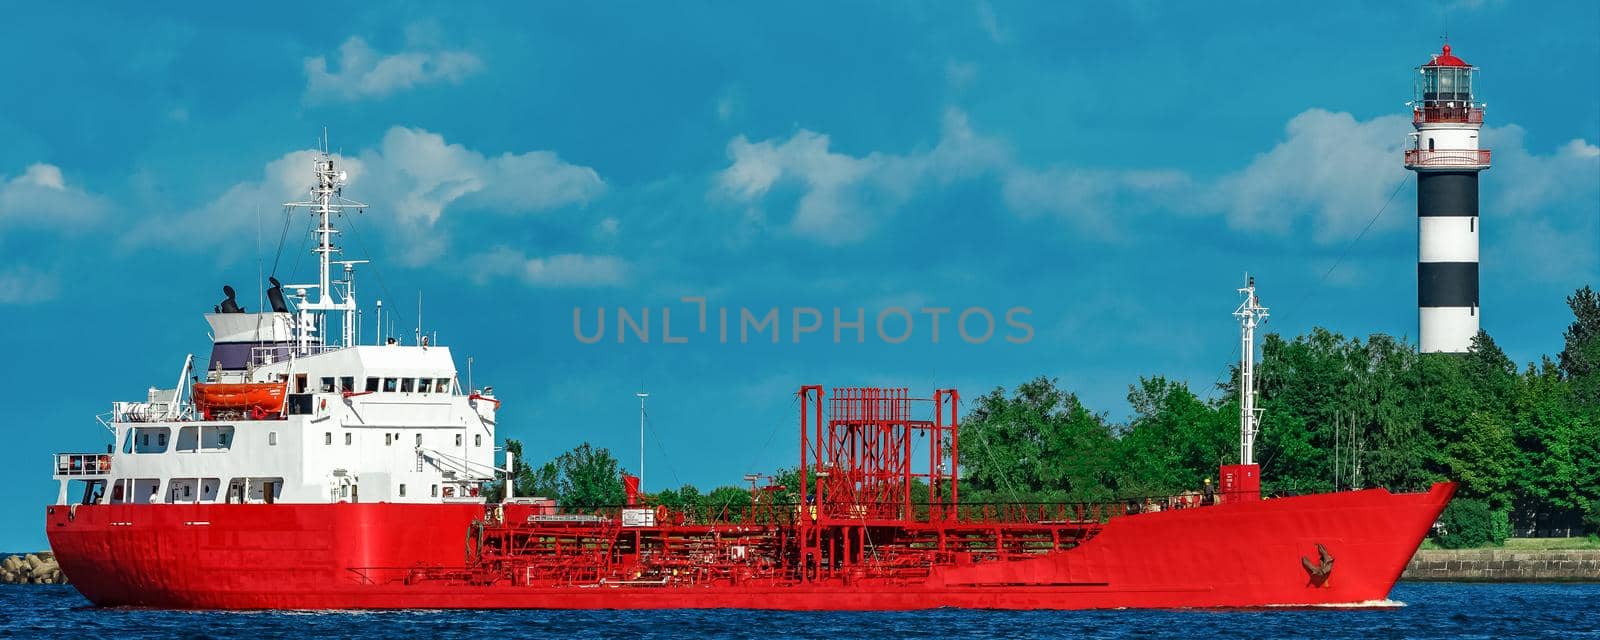 Red tanker ship by InfinitumProdux